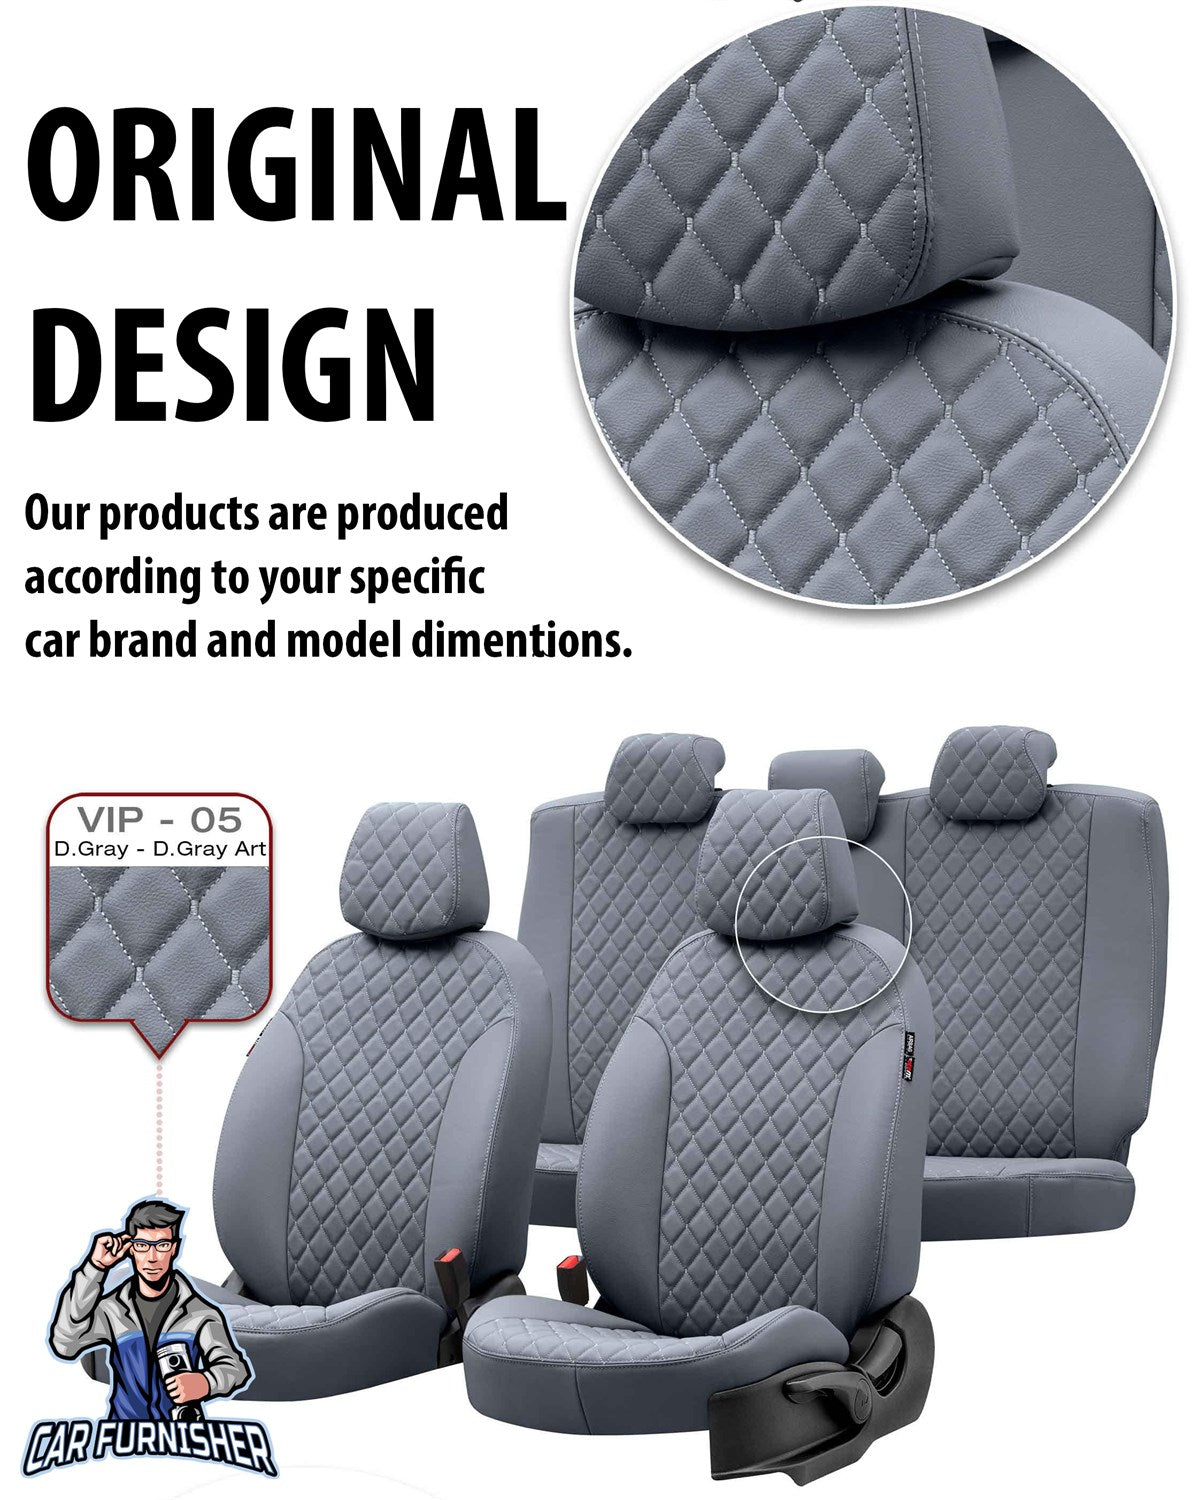 Chery Tiggo Seat Covers Madrid Leather Design Blue Leather